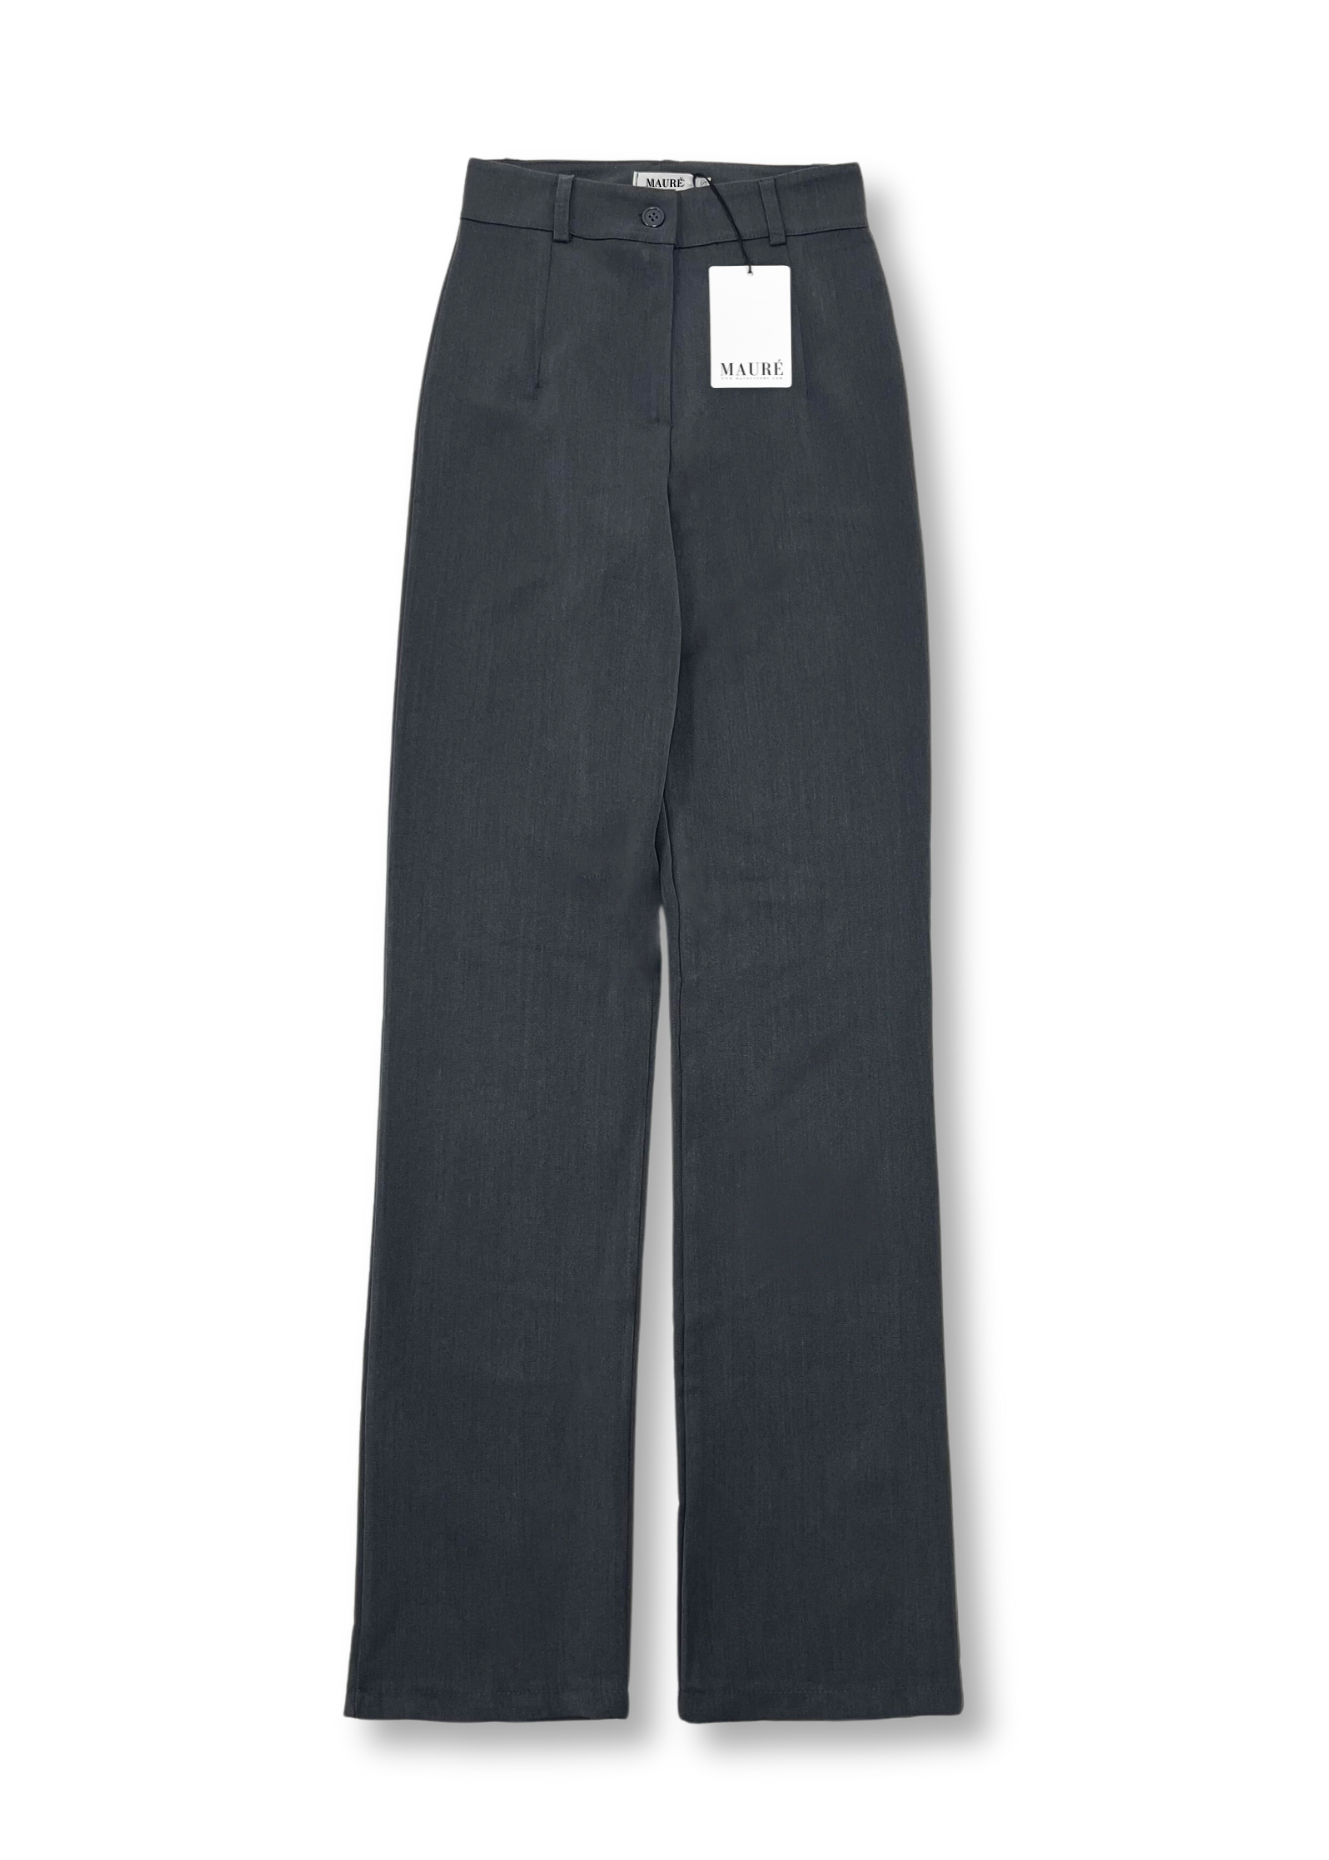 Straight leg pants classic dark washed gray (TALL)